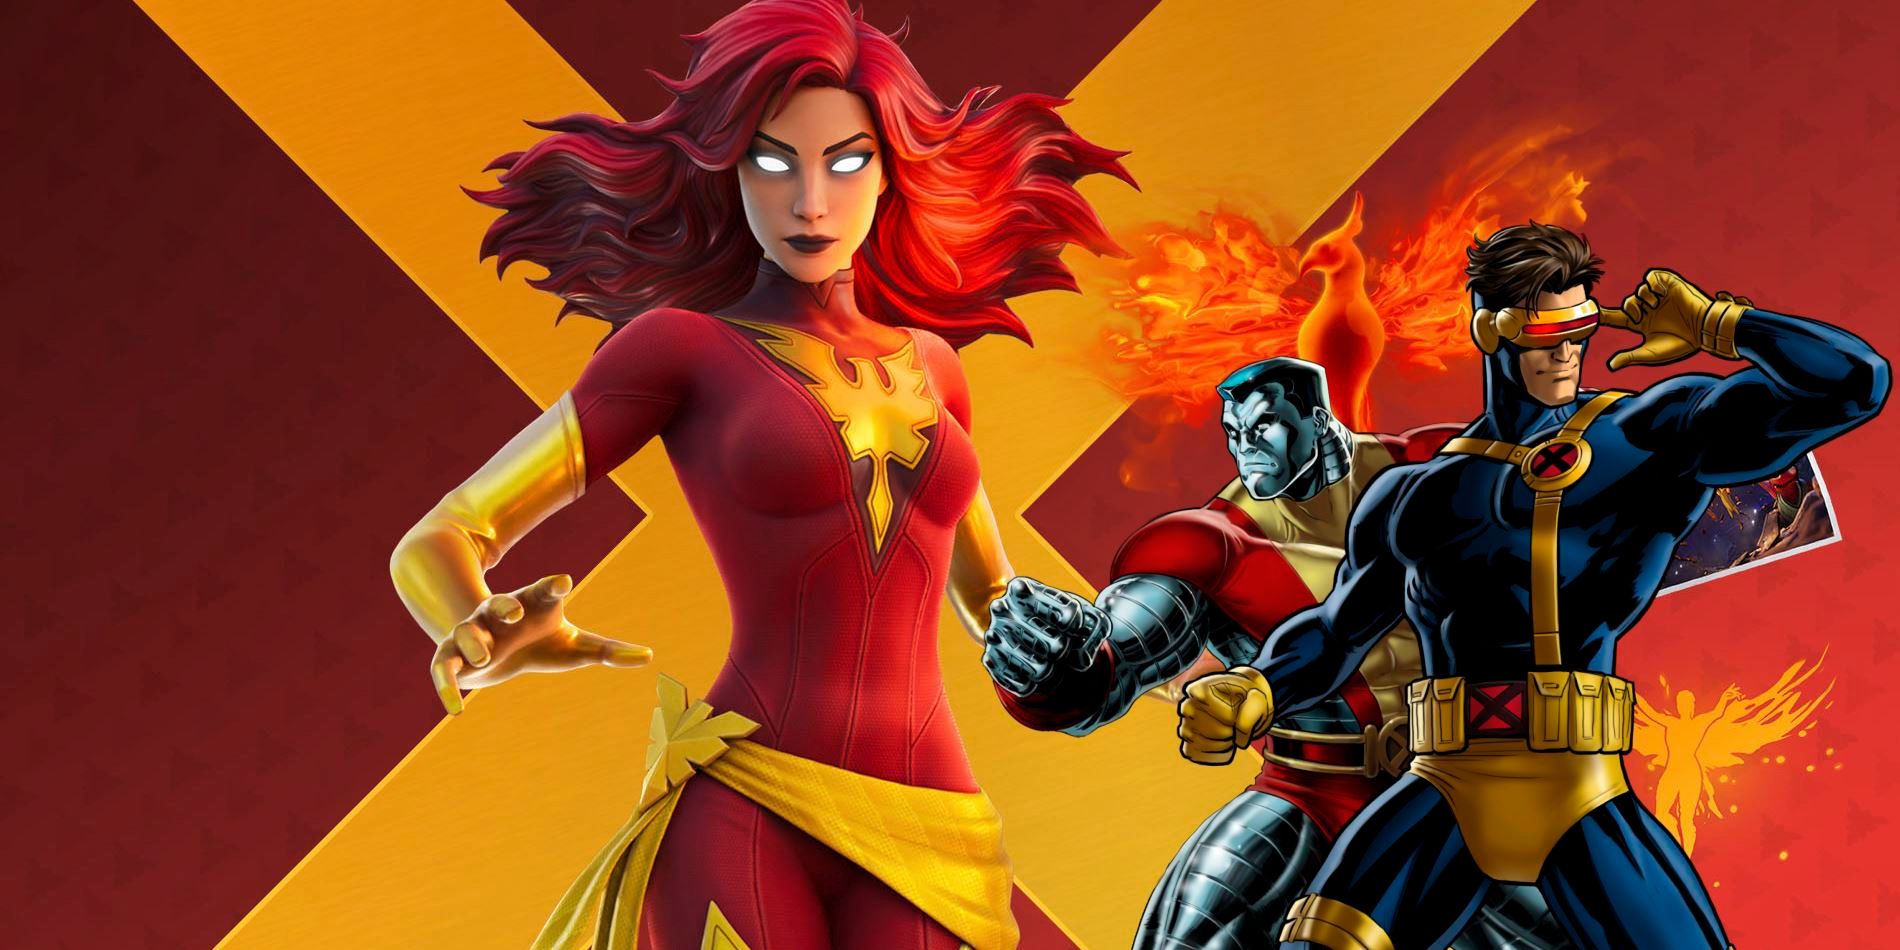 Dark Phoenix in Fortnite with the X-Men